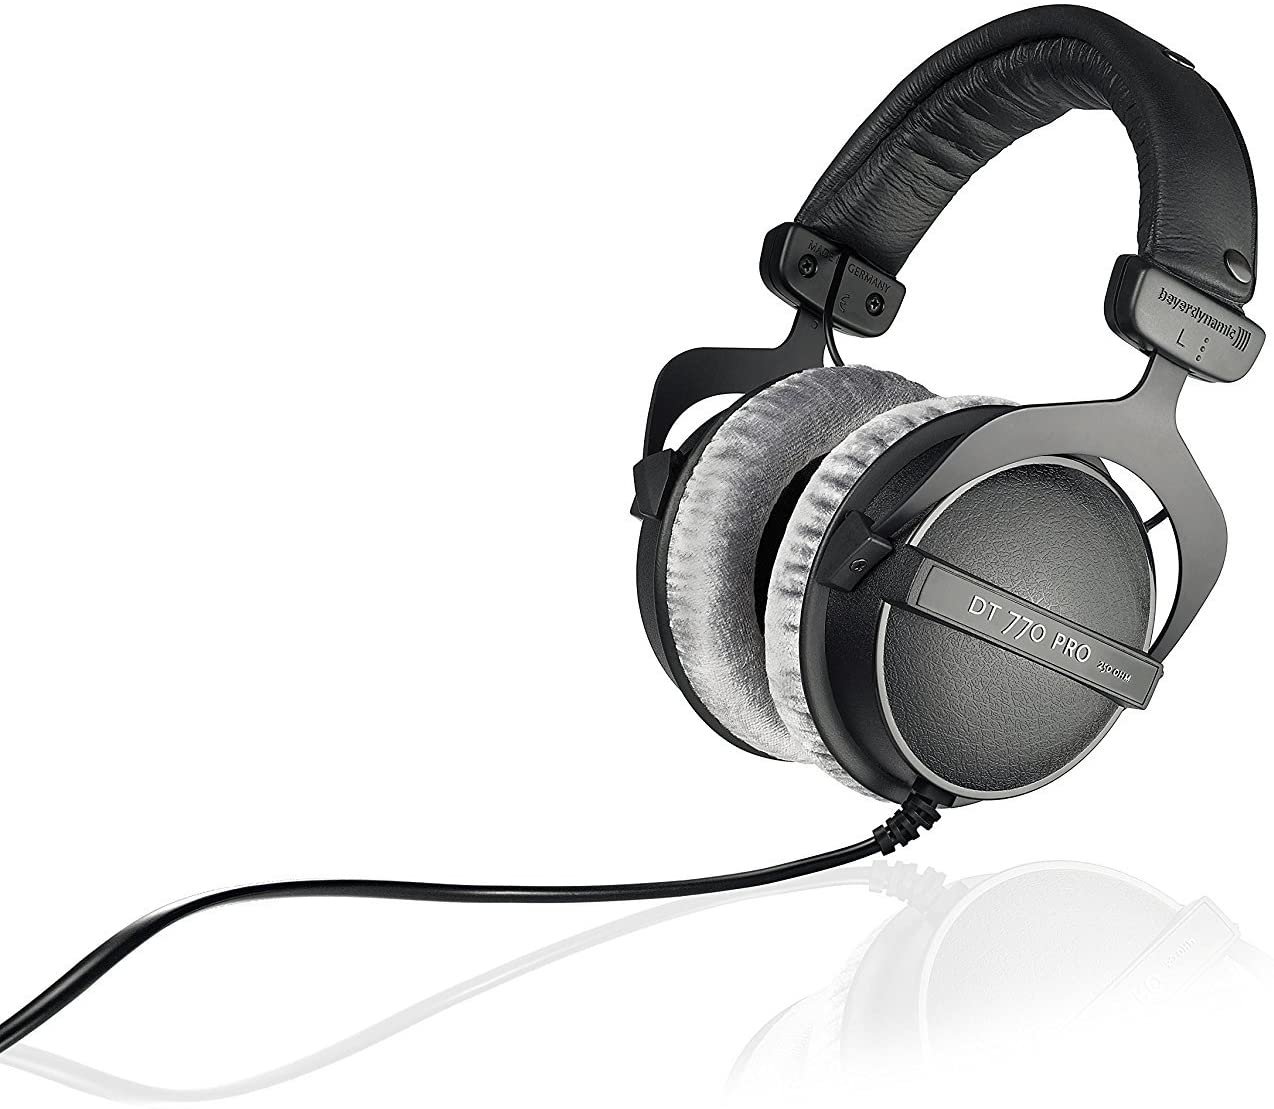 Beyerdynamic DT 770 PRO 250 Ohm Over-Ear Studio Headphones in Black for Studio Use - image 1 of 6